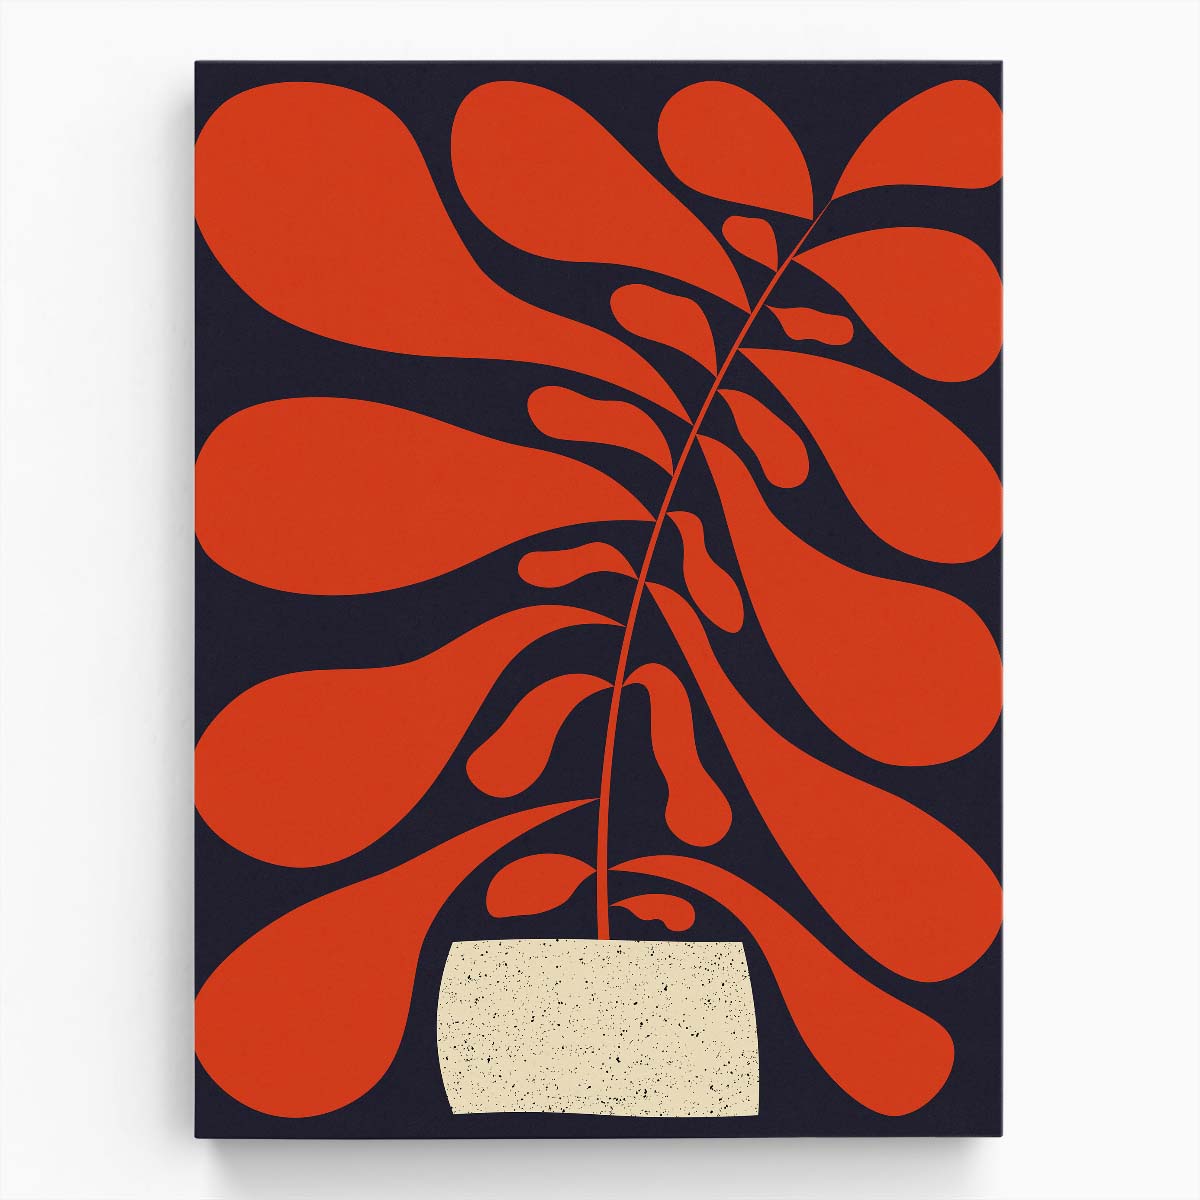 Abstract Botanical Illustration - Minimalist Orange Leaves Boho Art by Luxuriance Designs, made in USA